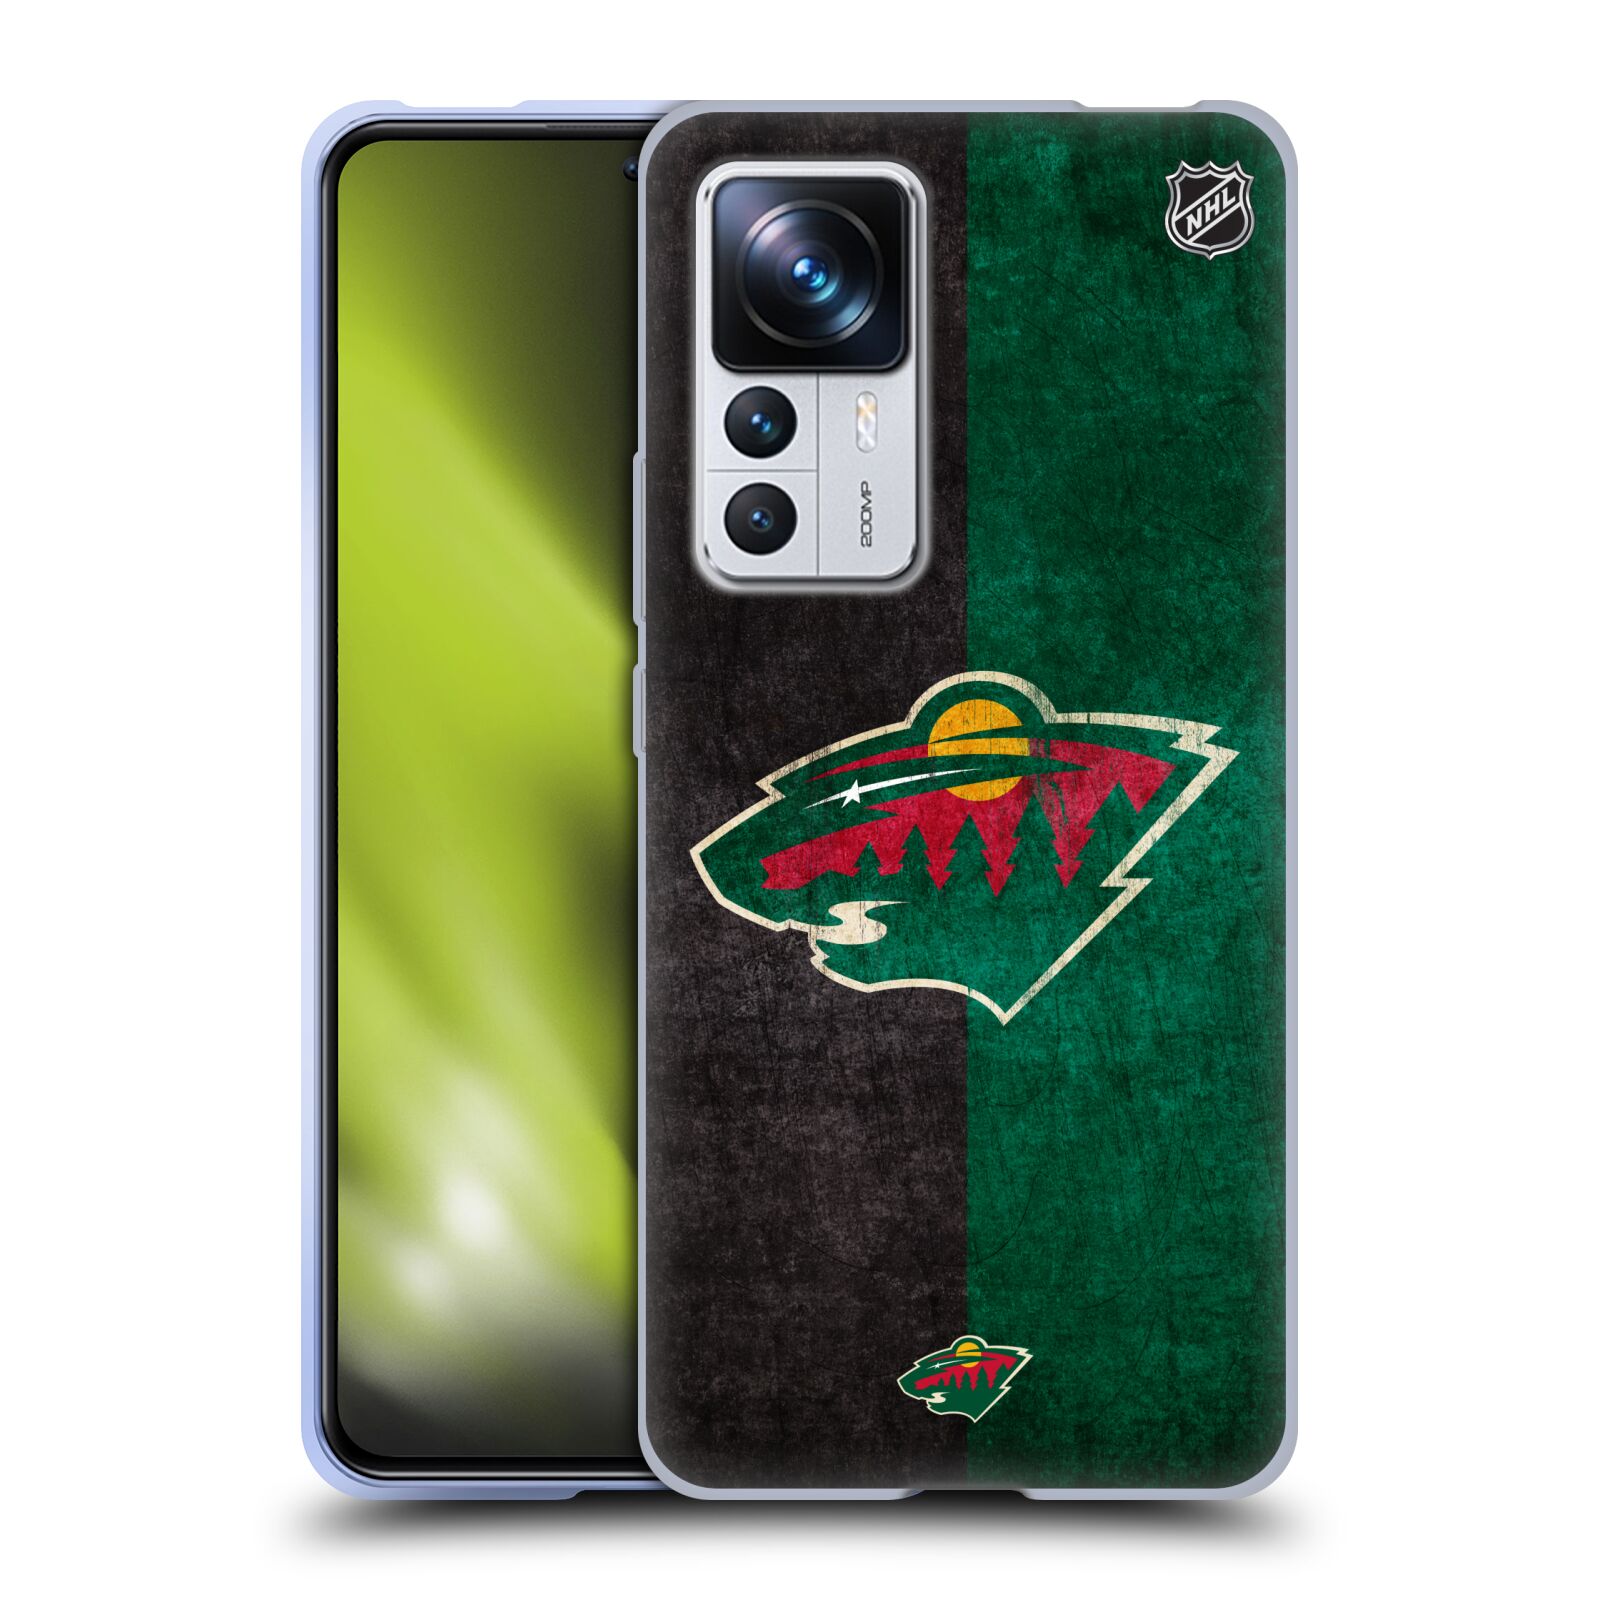 Silikonové pouzdro na mobil Xiaomi 12T / 12T Pro - NHL - Půlené logo Minnesota Wild (Silikonový kryt, obal, pouzdro na mobilní telefon Xiaomi 12T / 12T Pro s licencovaným motivem NHL - Půlené logo Minnesota Wild)